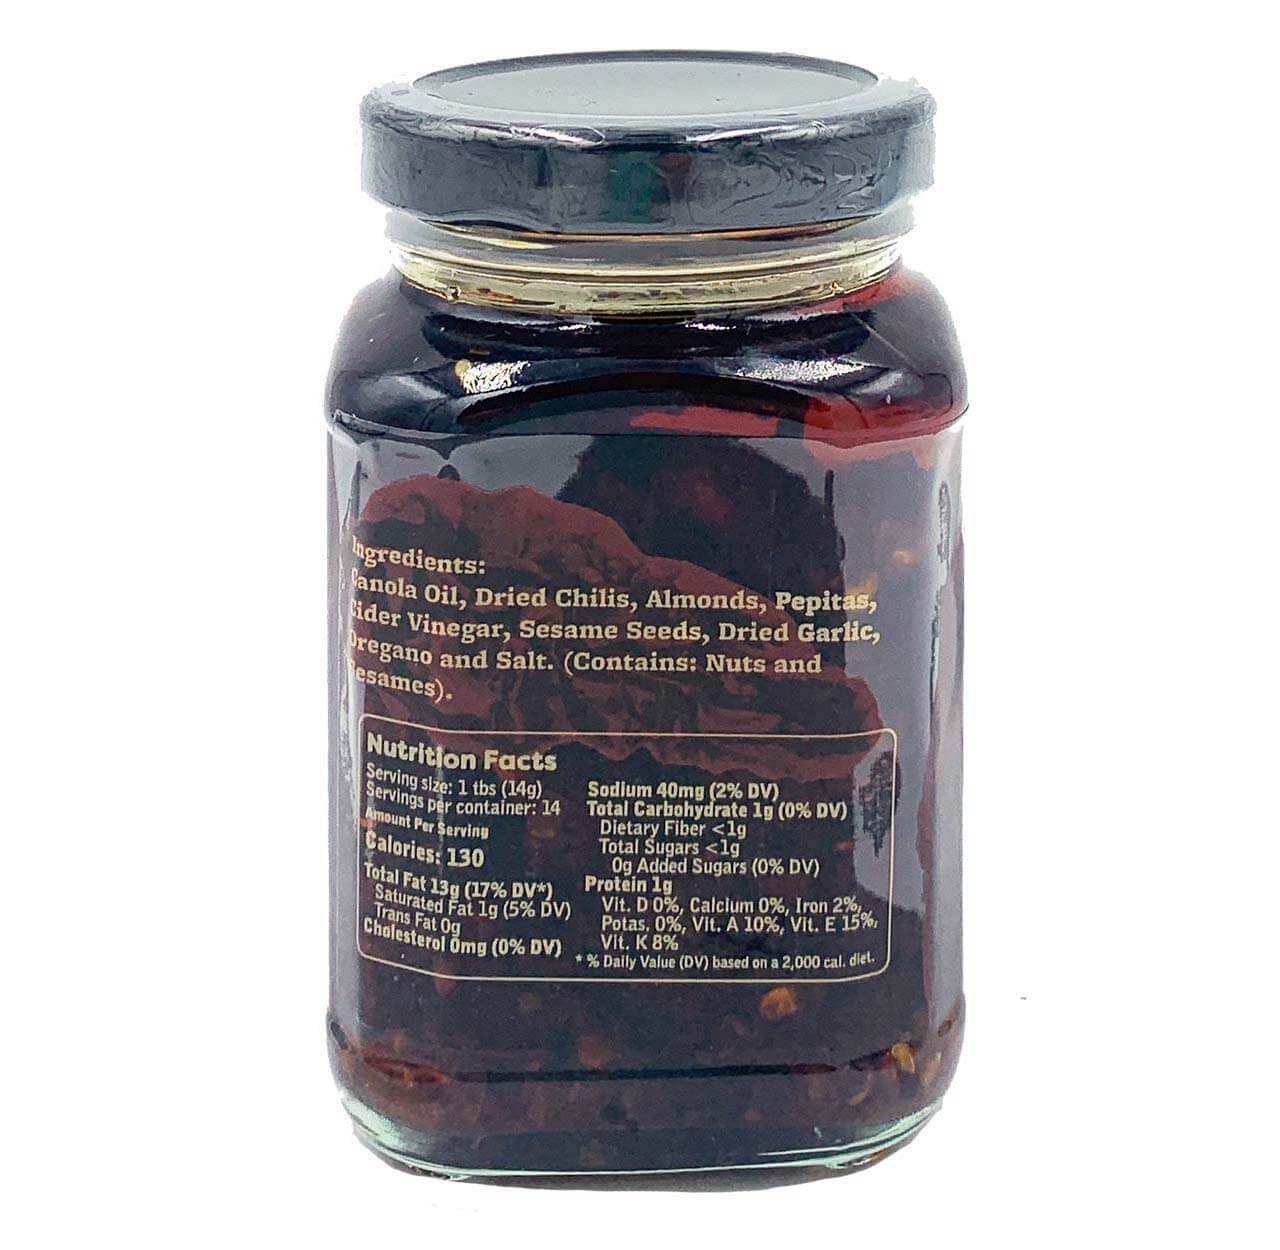 Spicy Macha Chili Oil